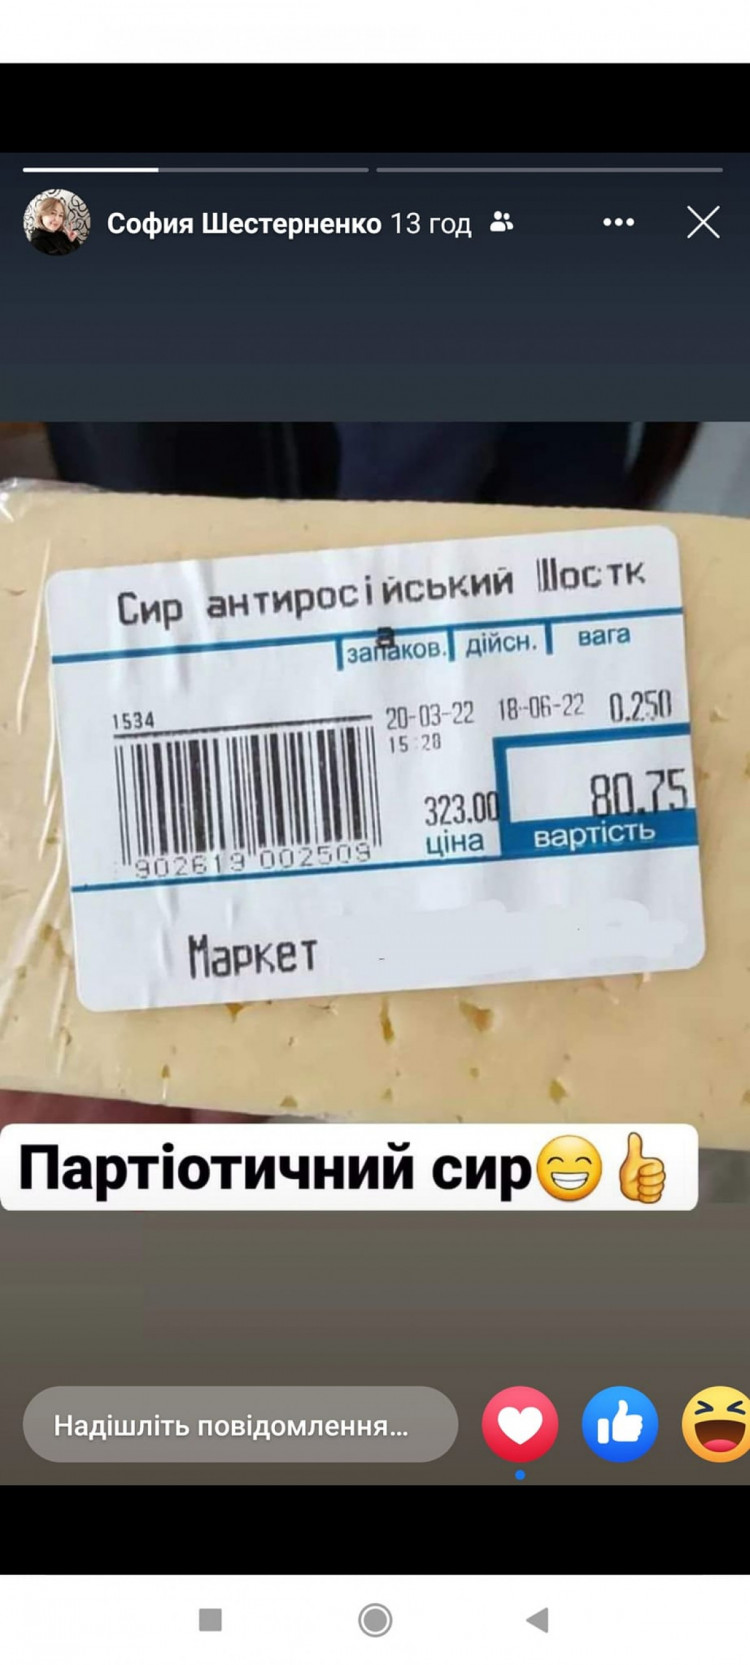 Сыр антироссийский